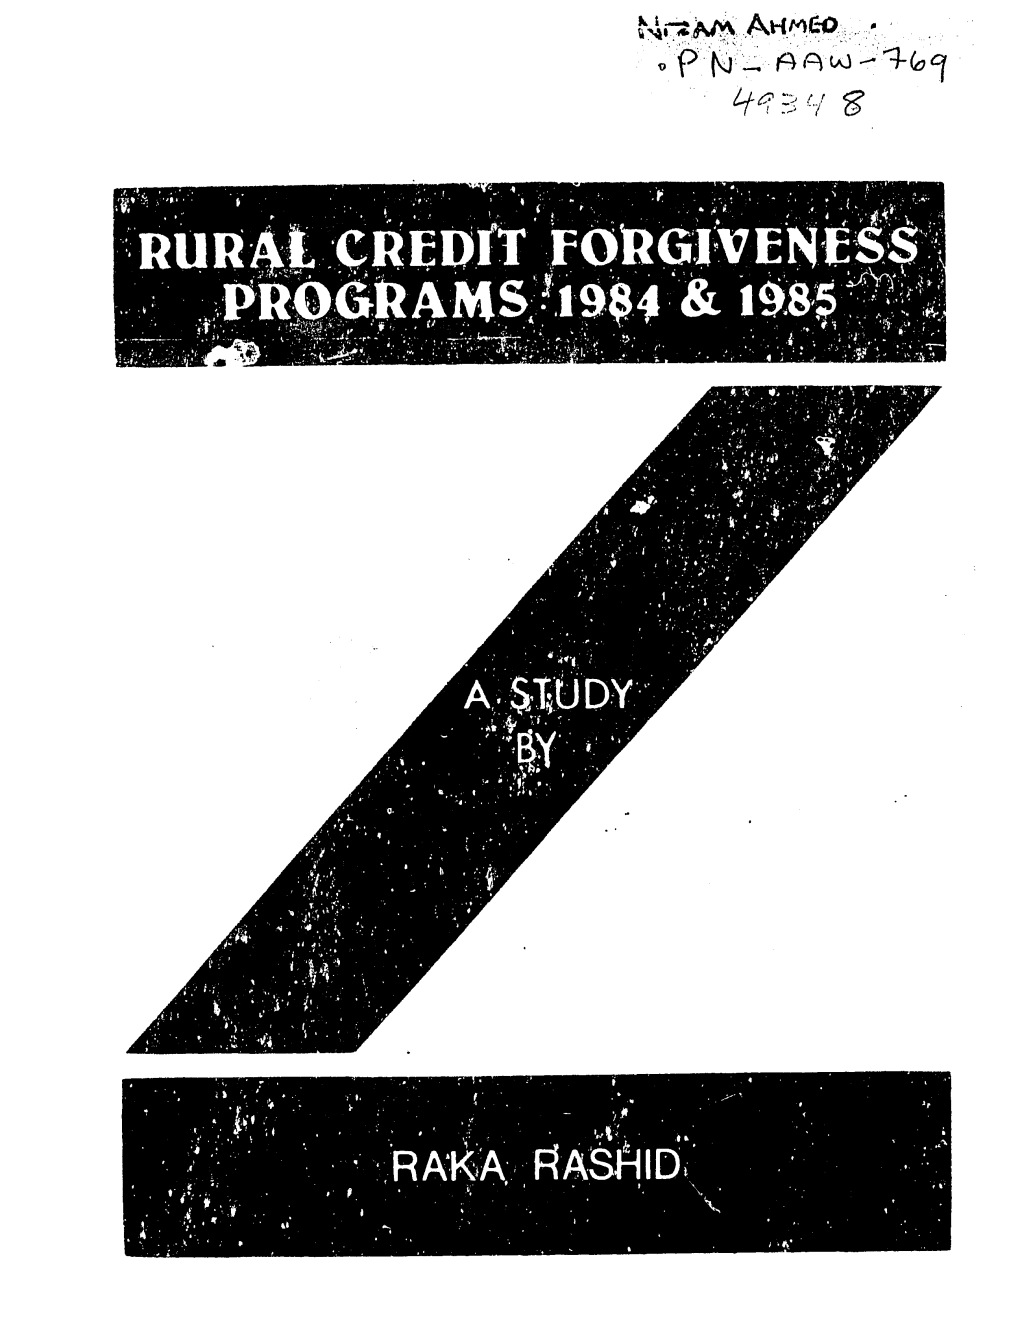 Rural Credit Forgiveness Programs 1984 & 1985 a Study by Raka Rashid